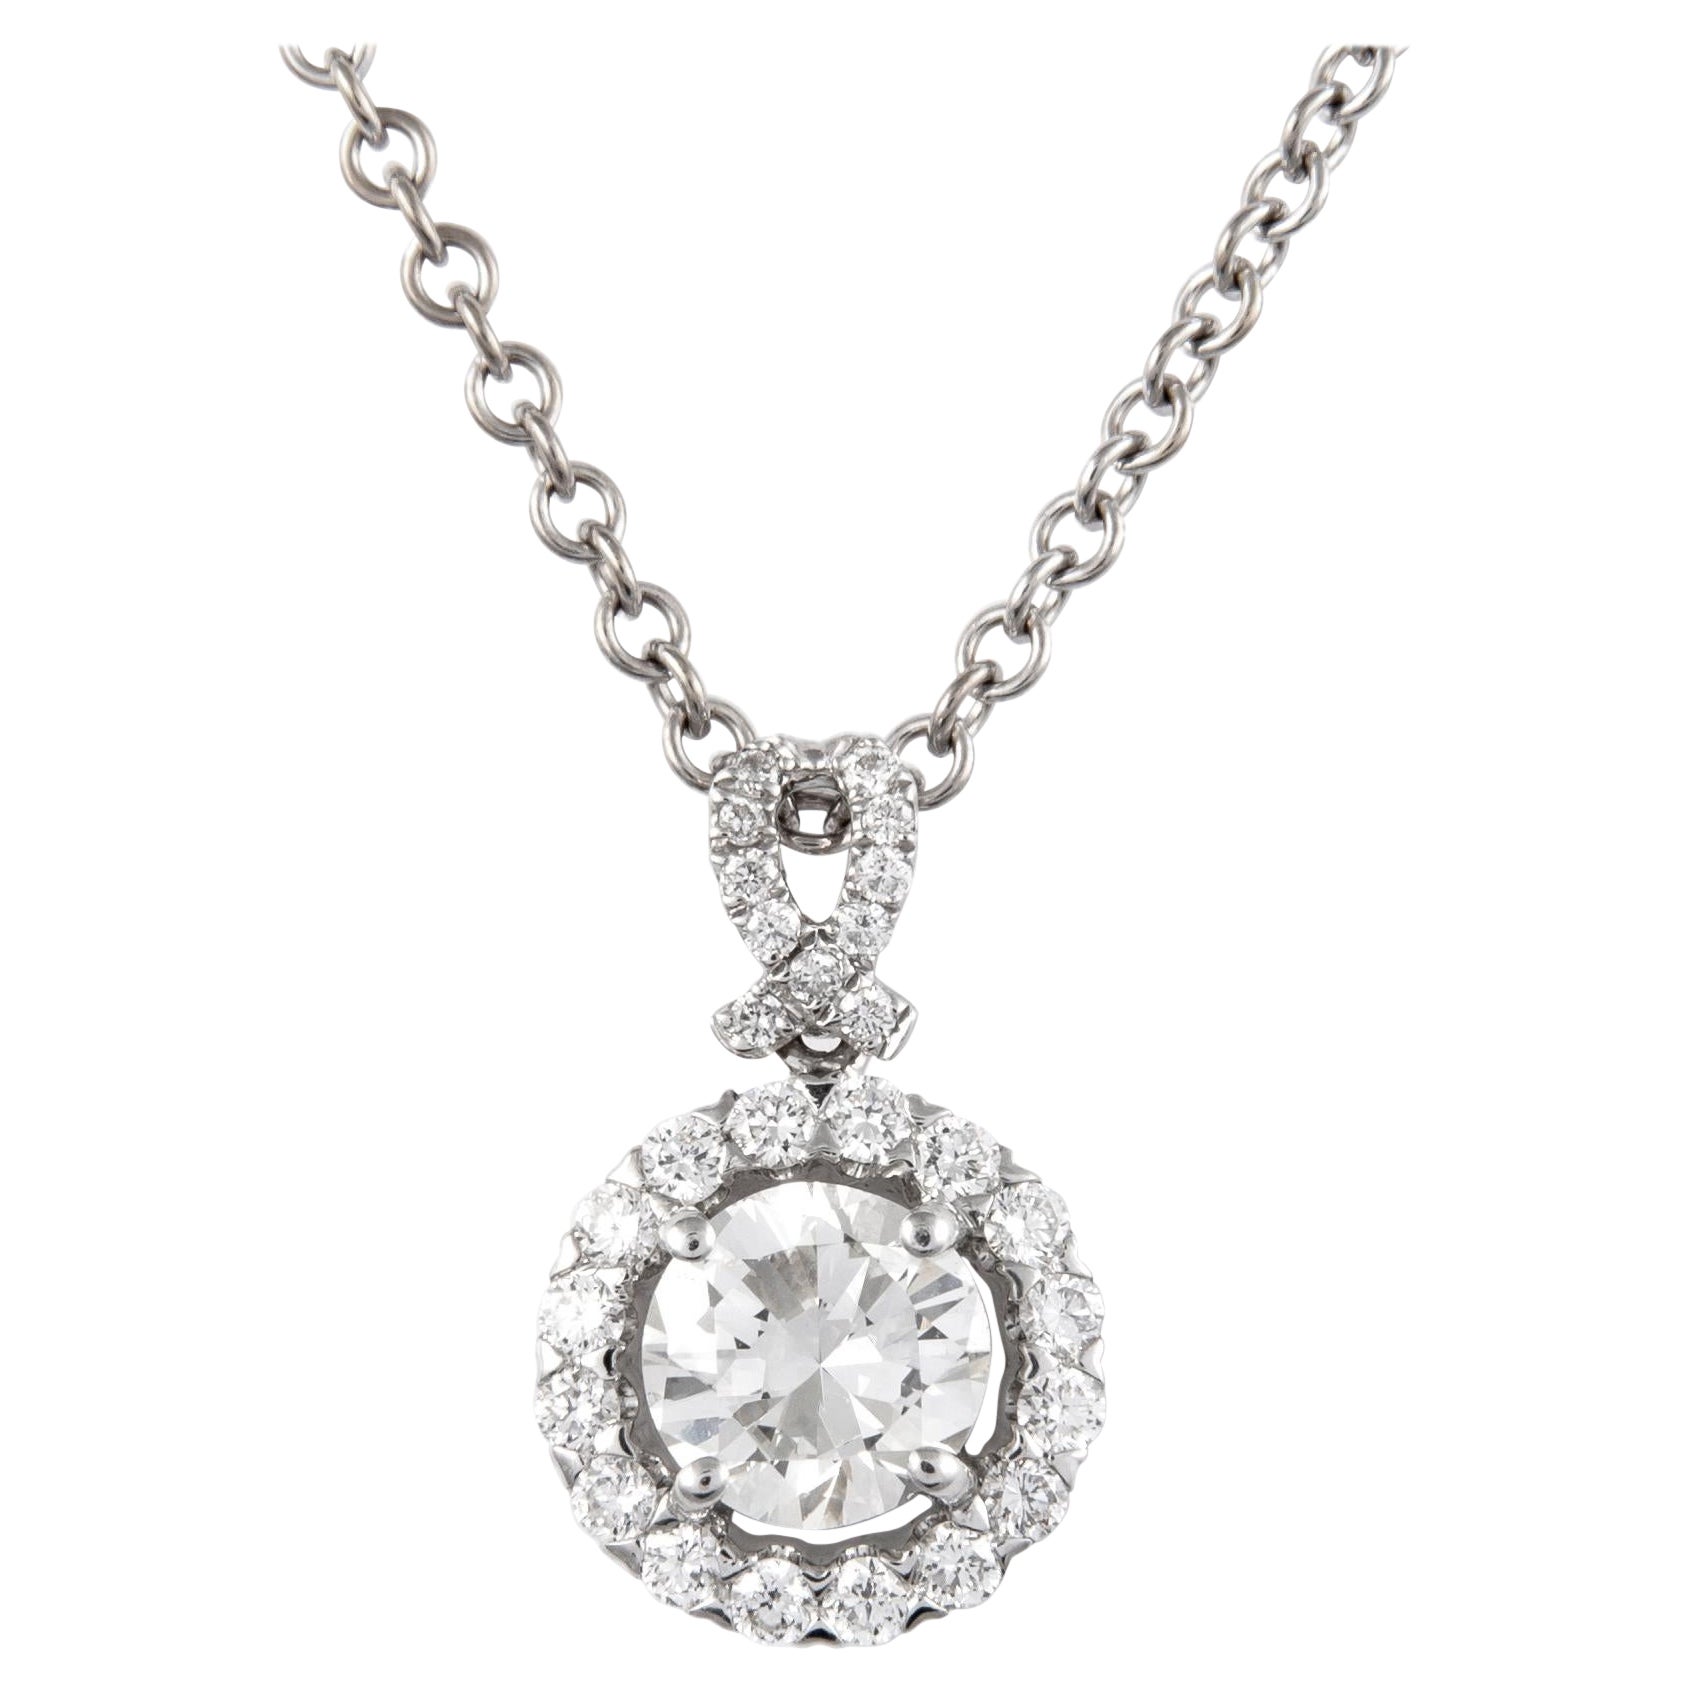 Alexander 1.22ct Round Diamond with Halo 18k White Gold Pendant Necklace